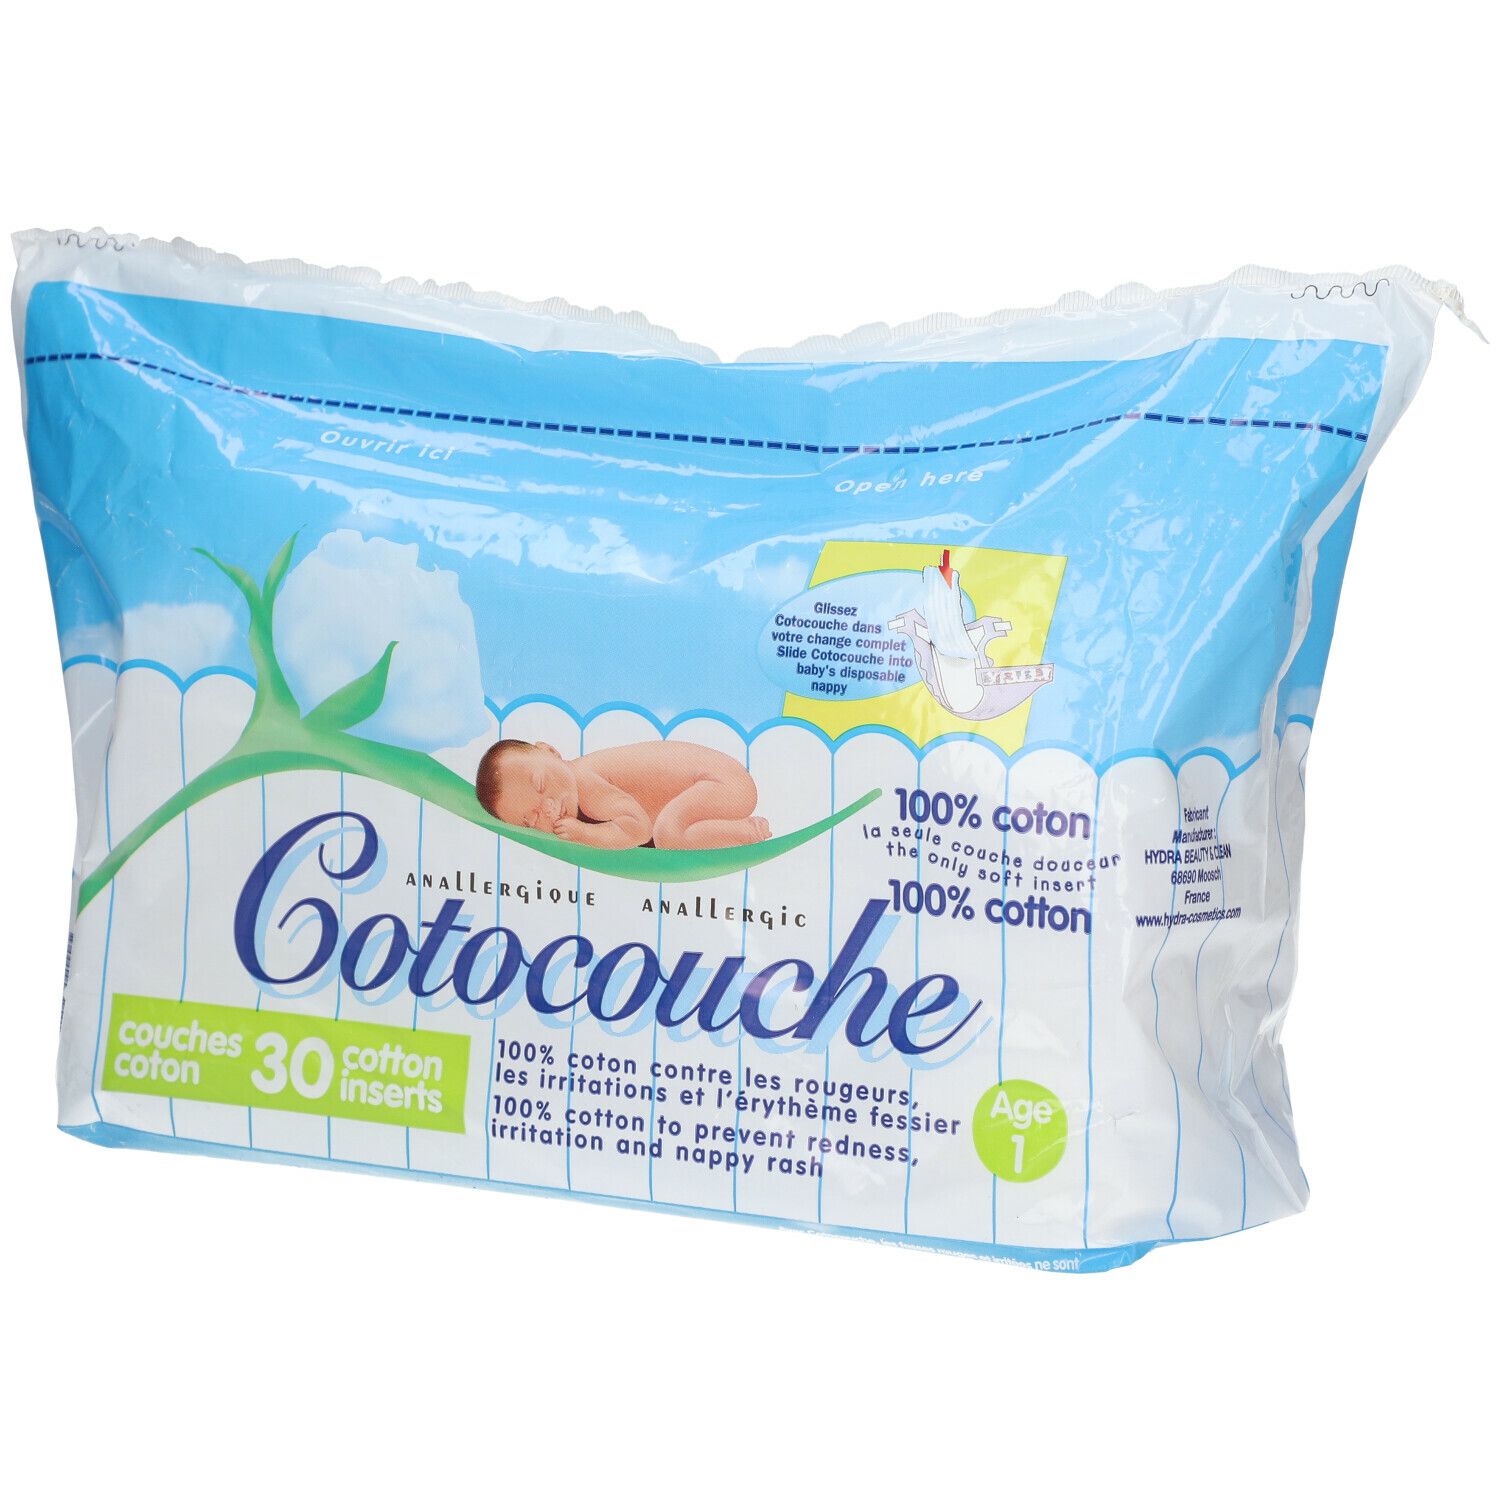 Cotocouche Couches coton anallergique 1er âge 30 pc(s) - Redcare